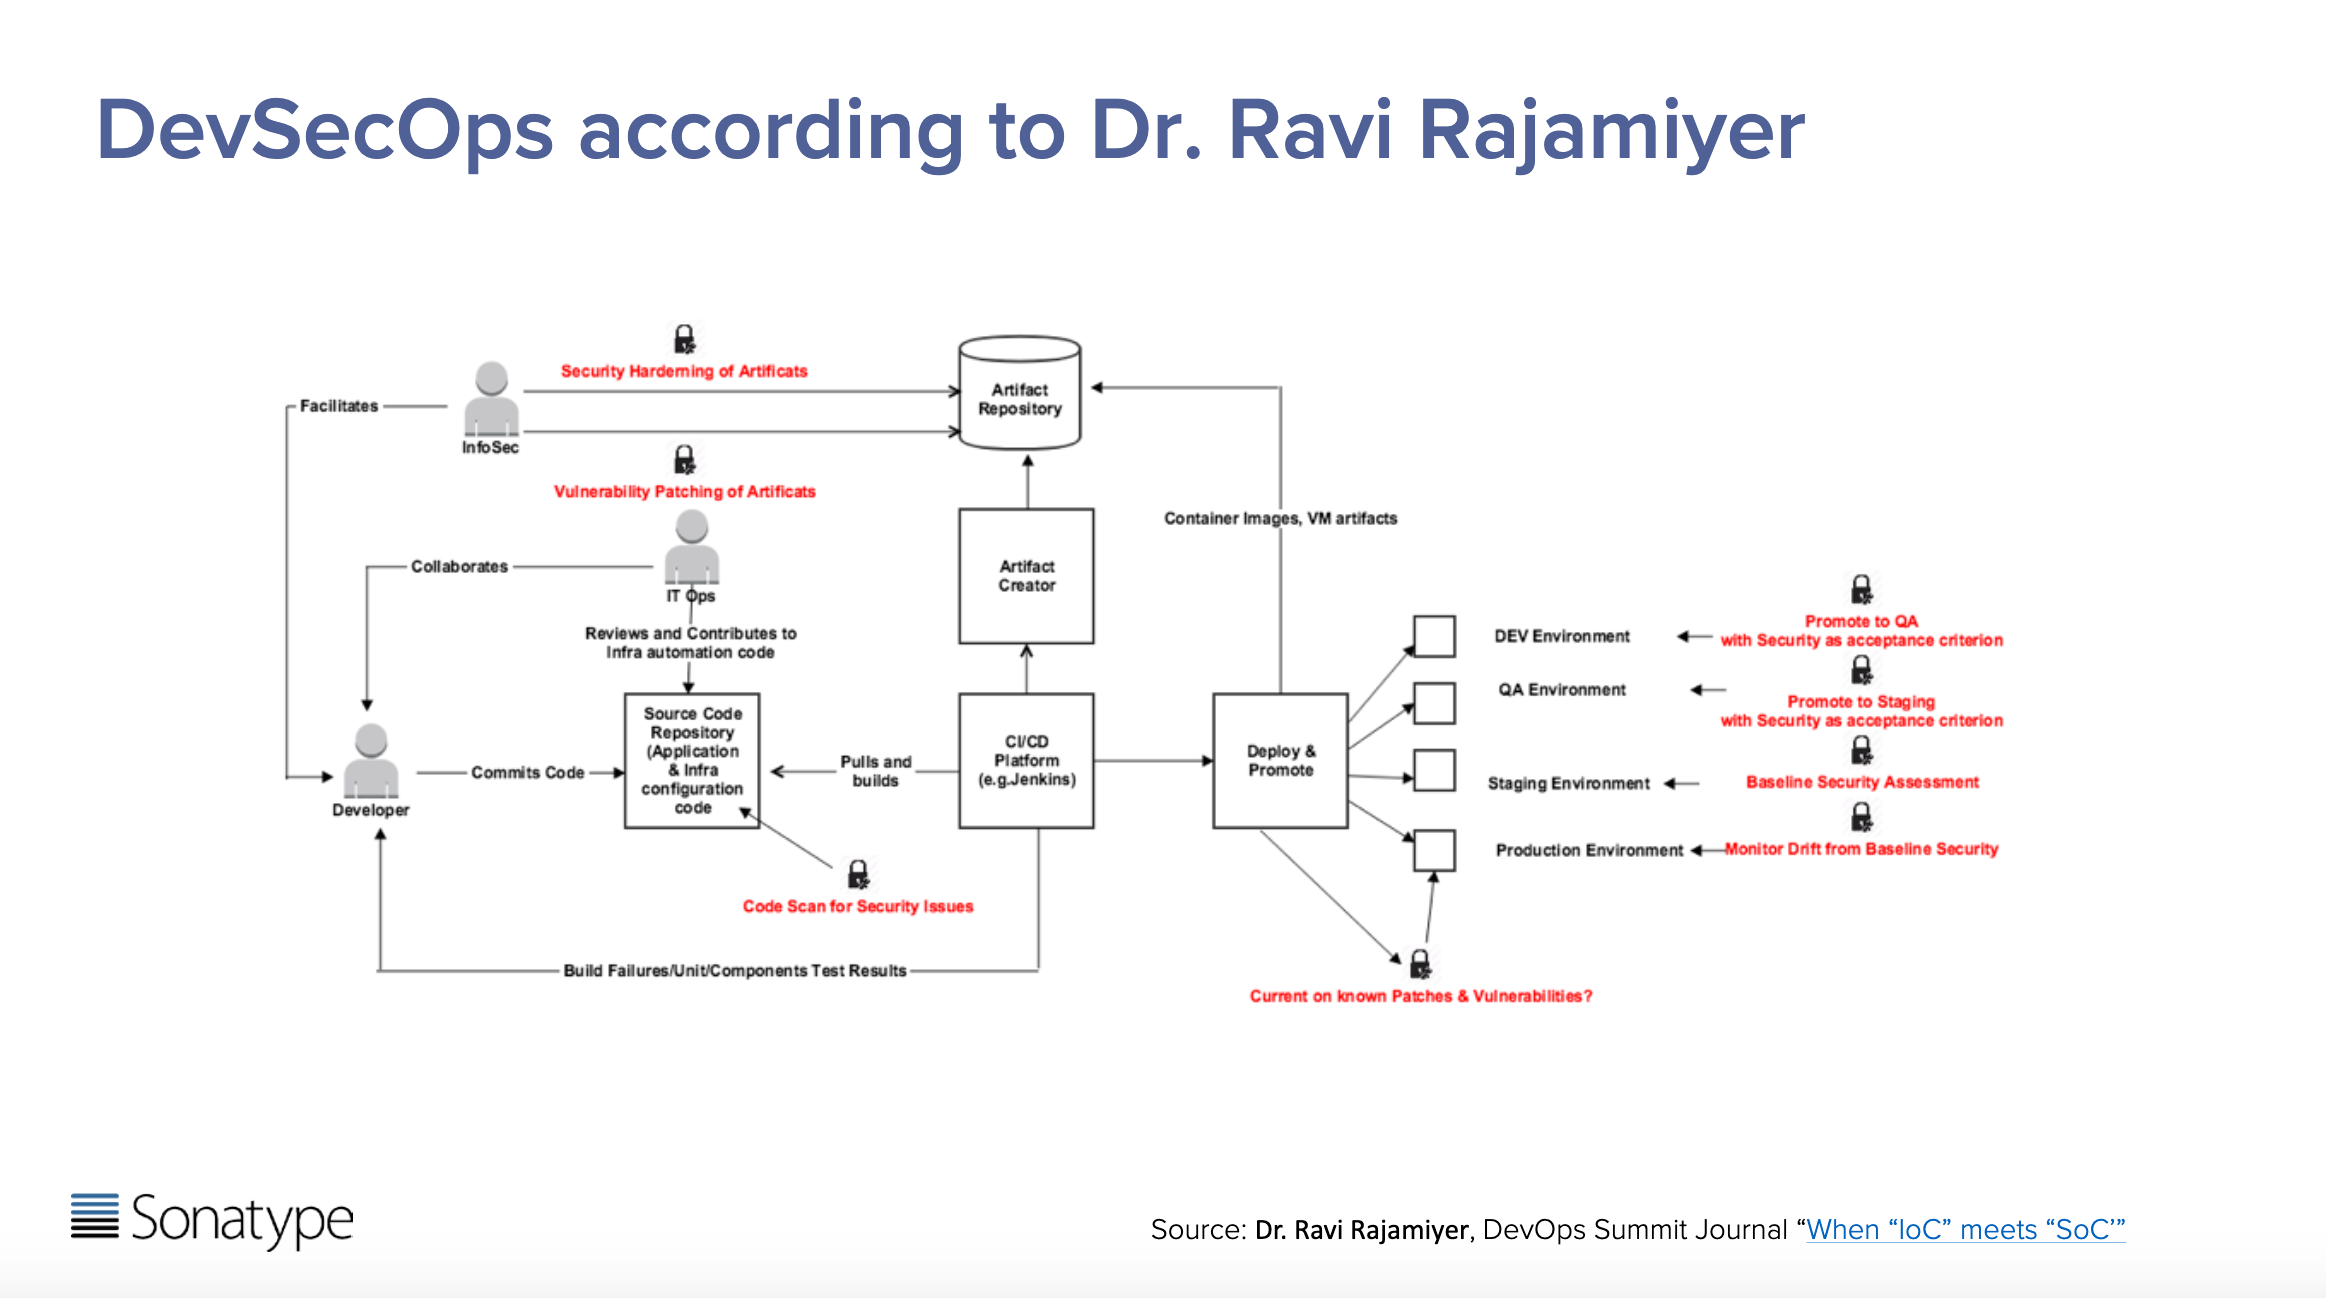 DevSecOps according to Dr. Ravi Rajamiyer